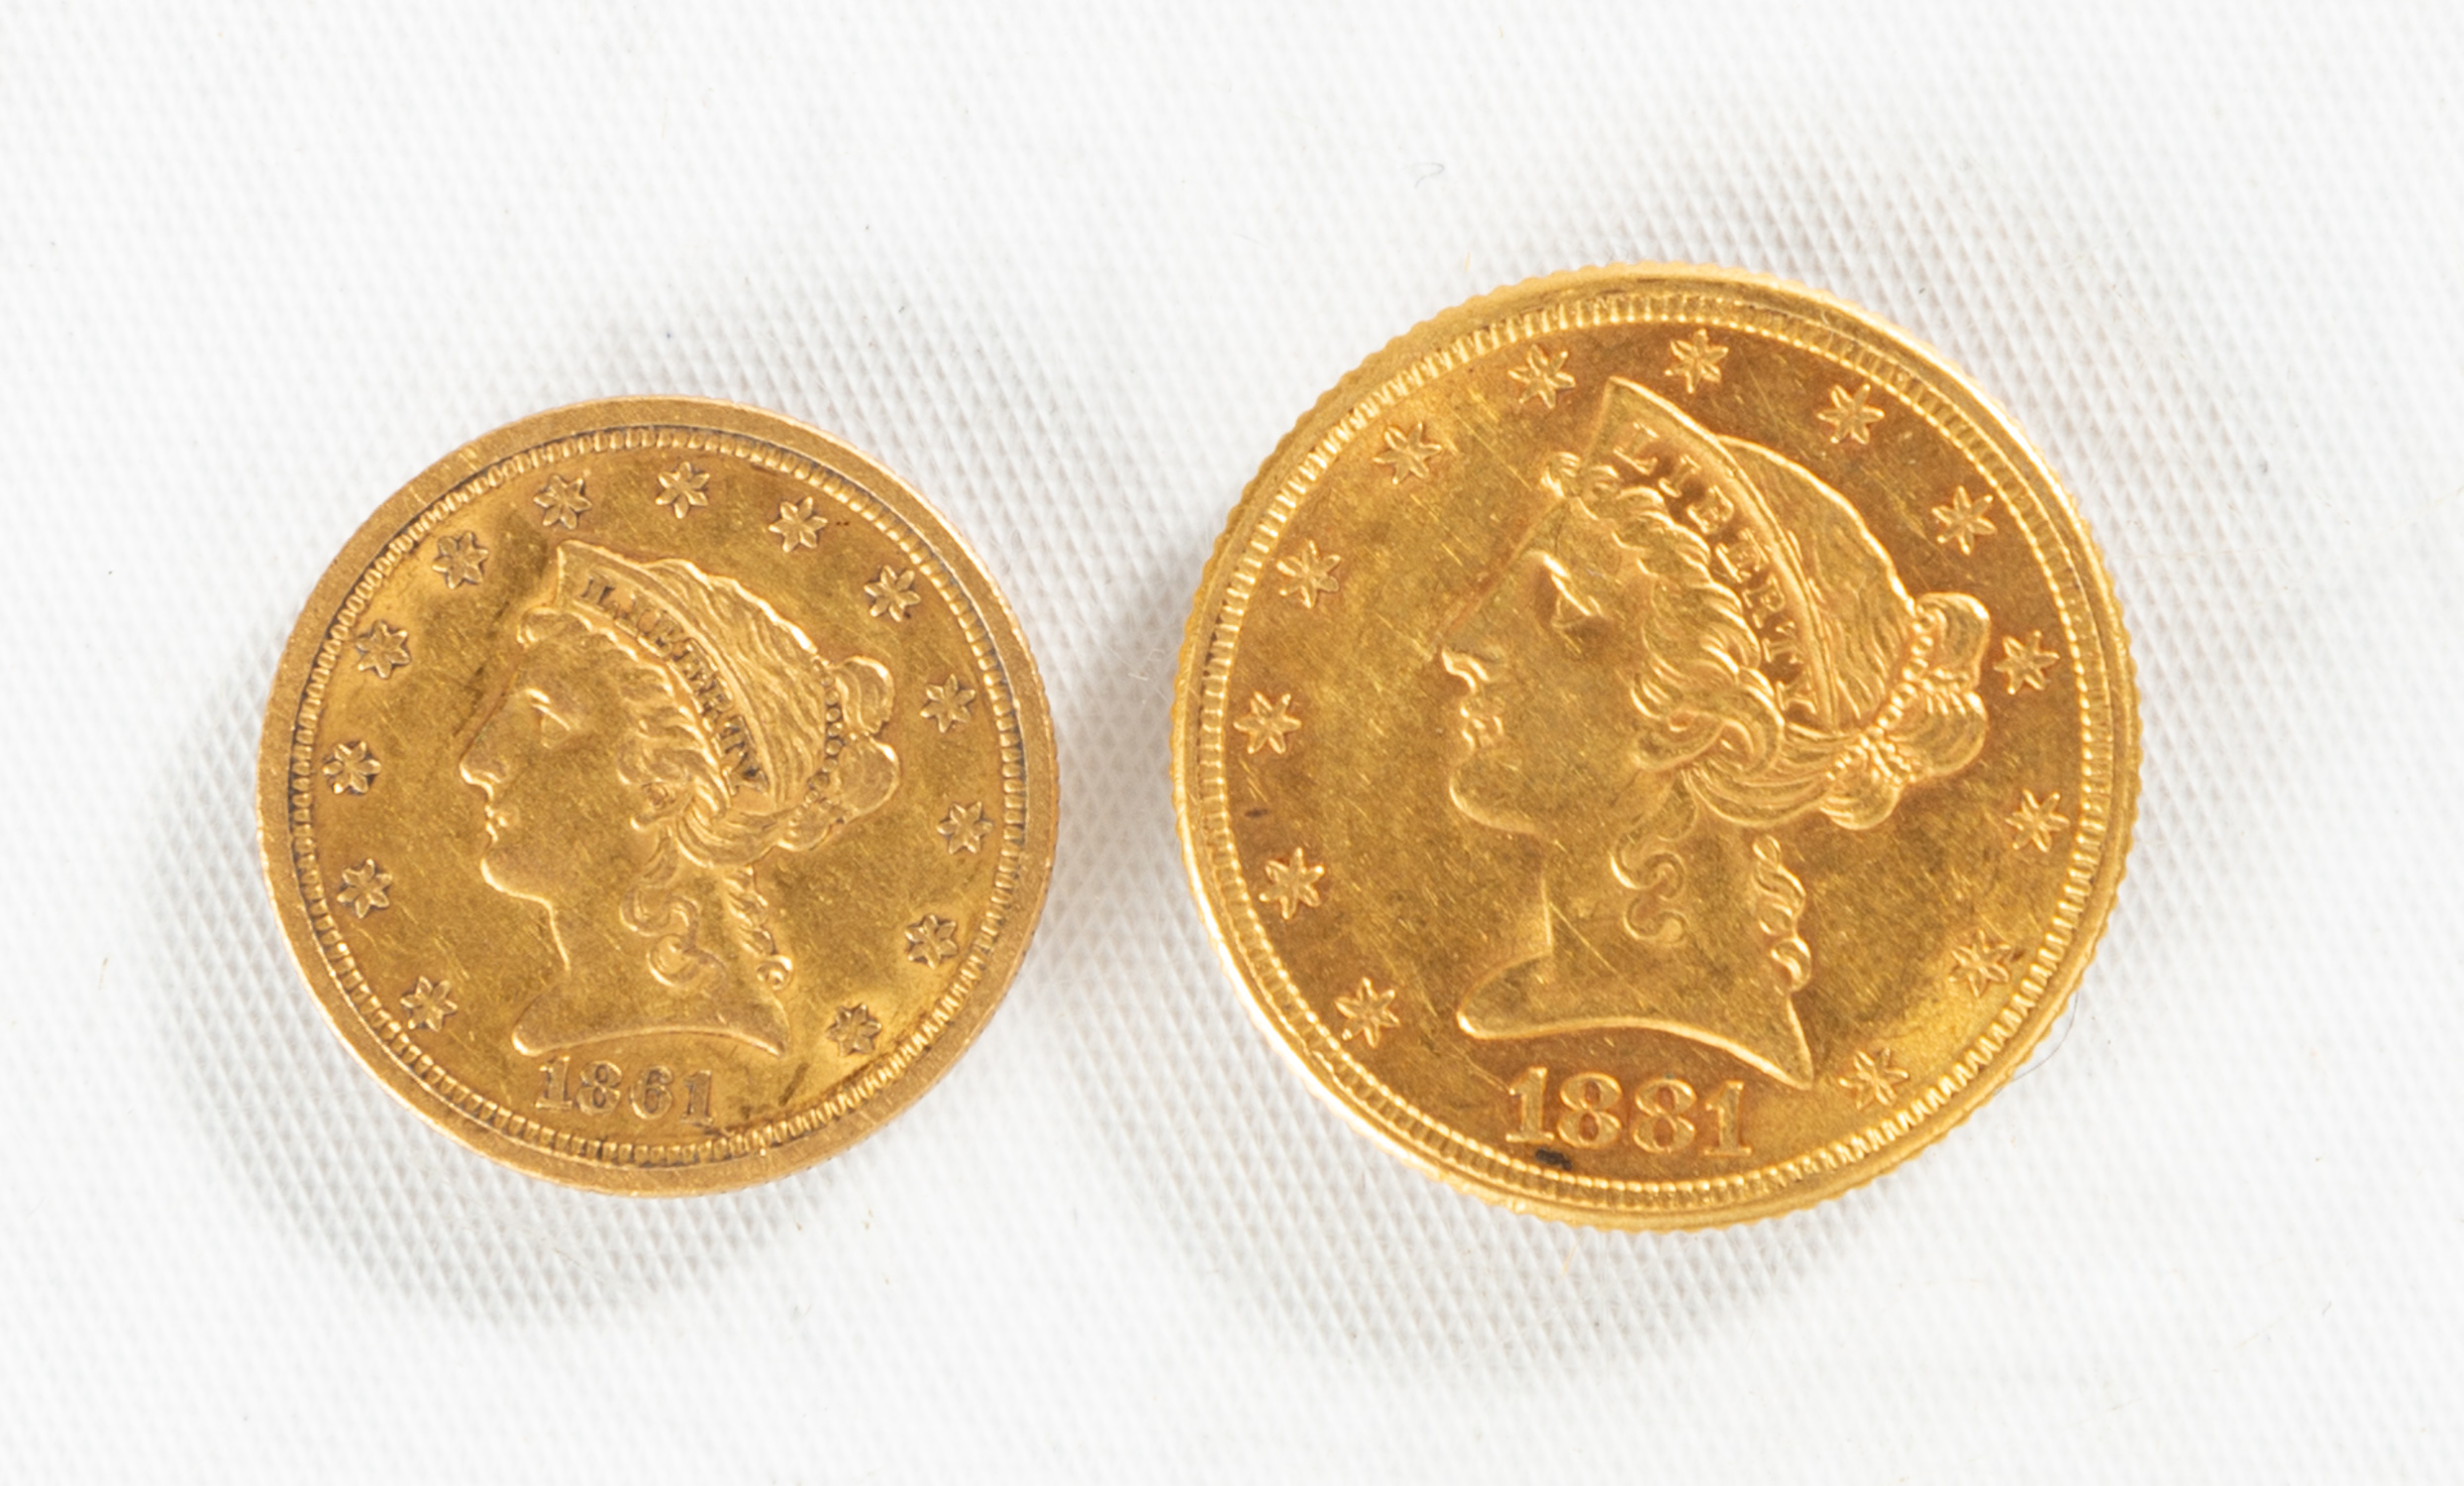 US 1881 FIVE DOLLAR GOLD COIN &